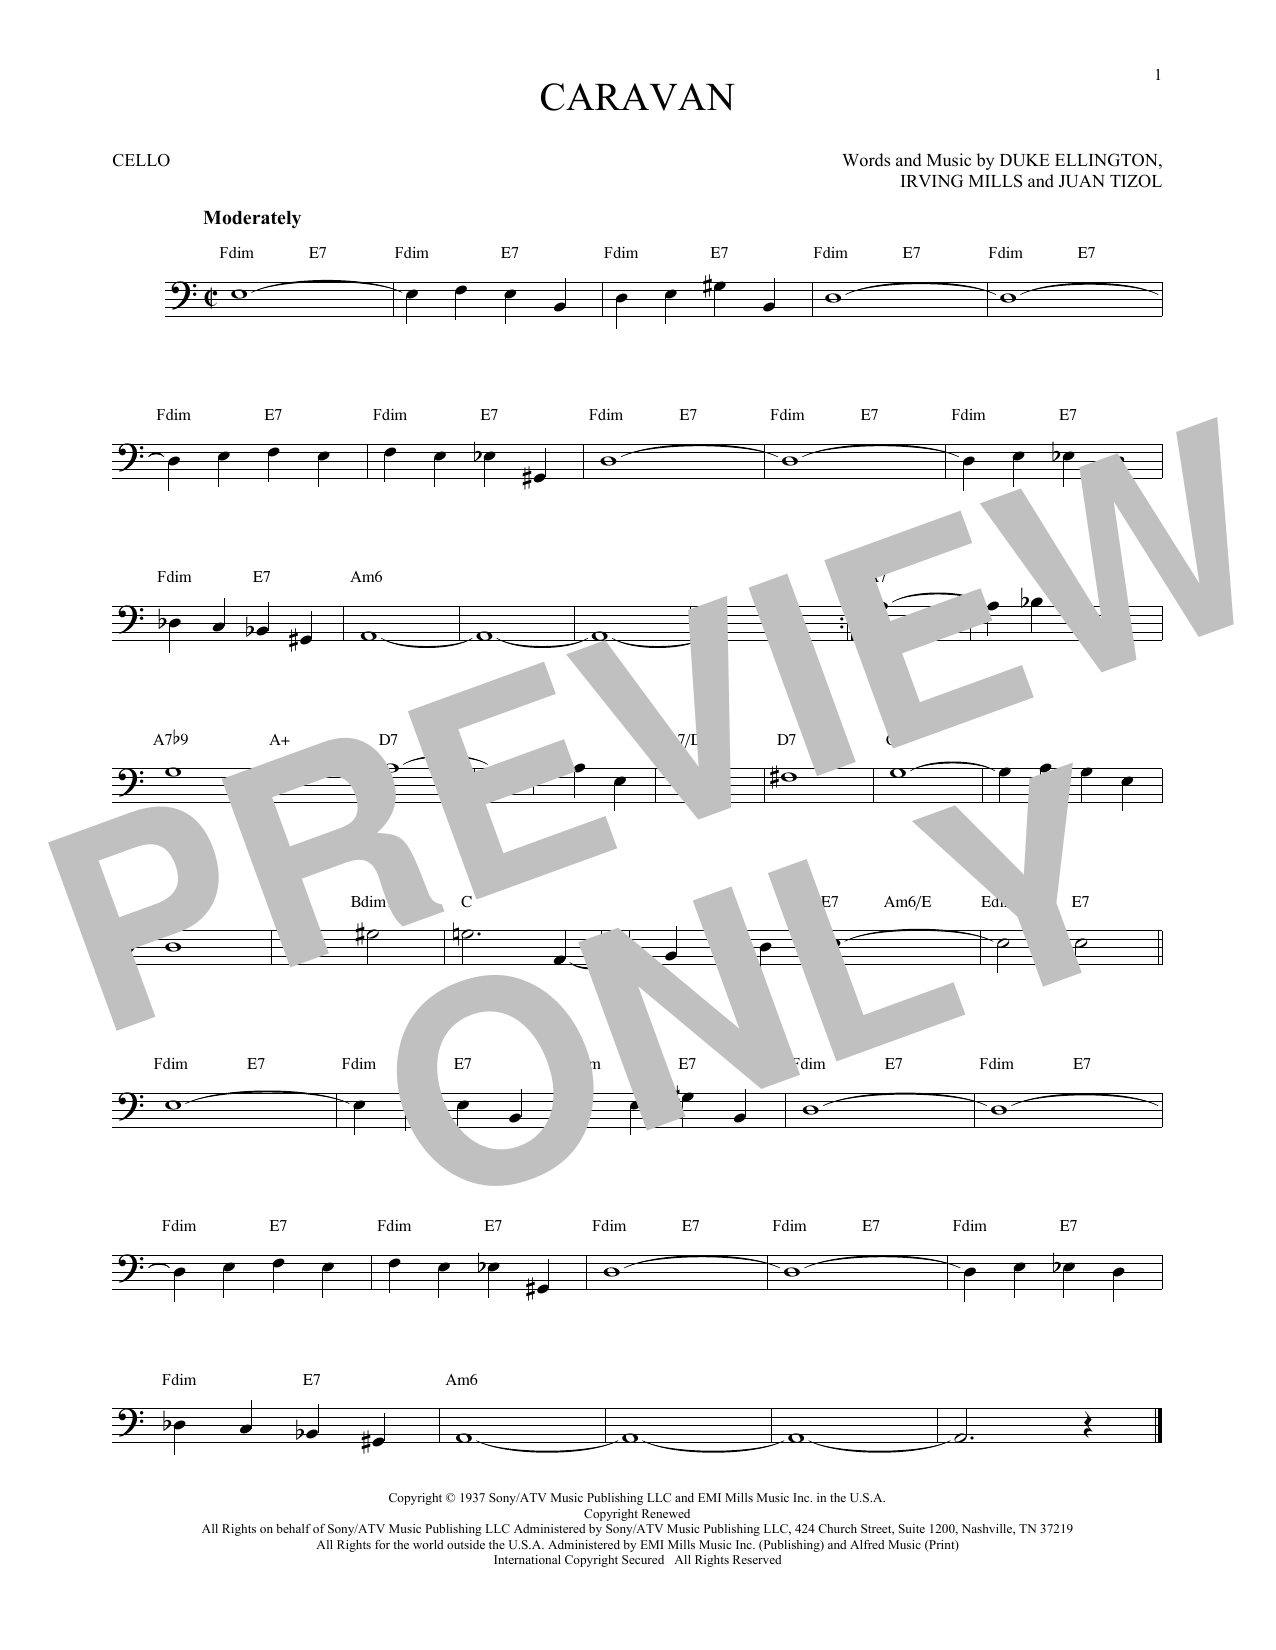 Download Juan Tizol & Duke Ellington Caravan Sheet Music and learn how to play Trombone PDF digital score in minutes